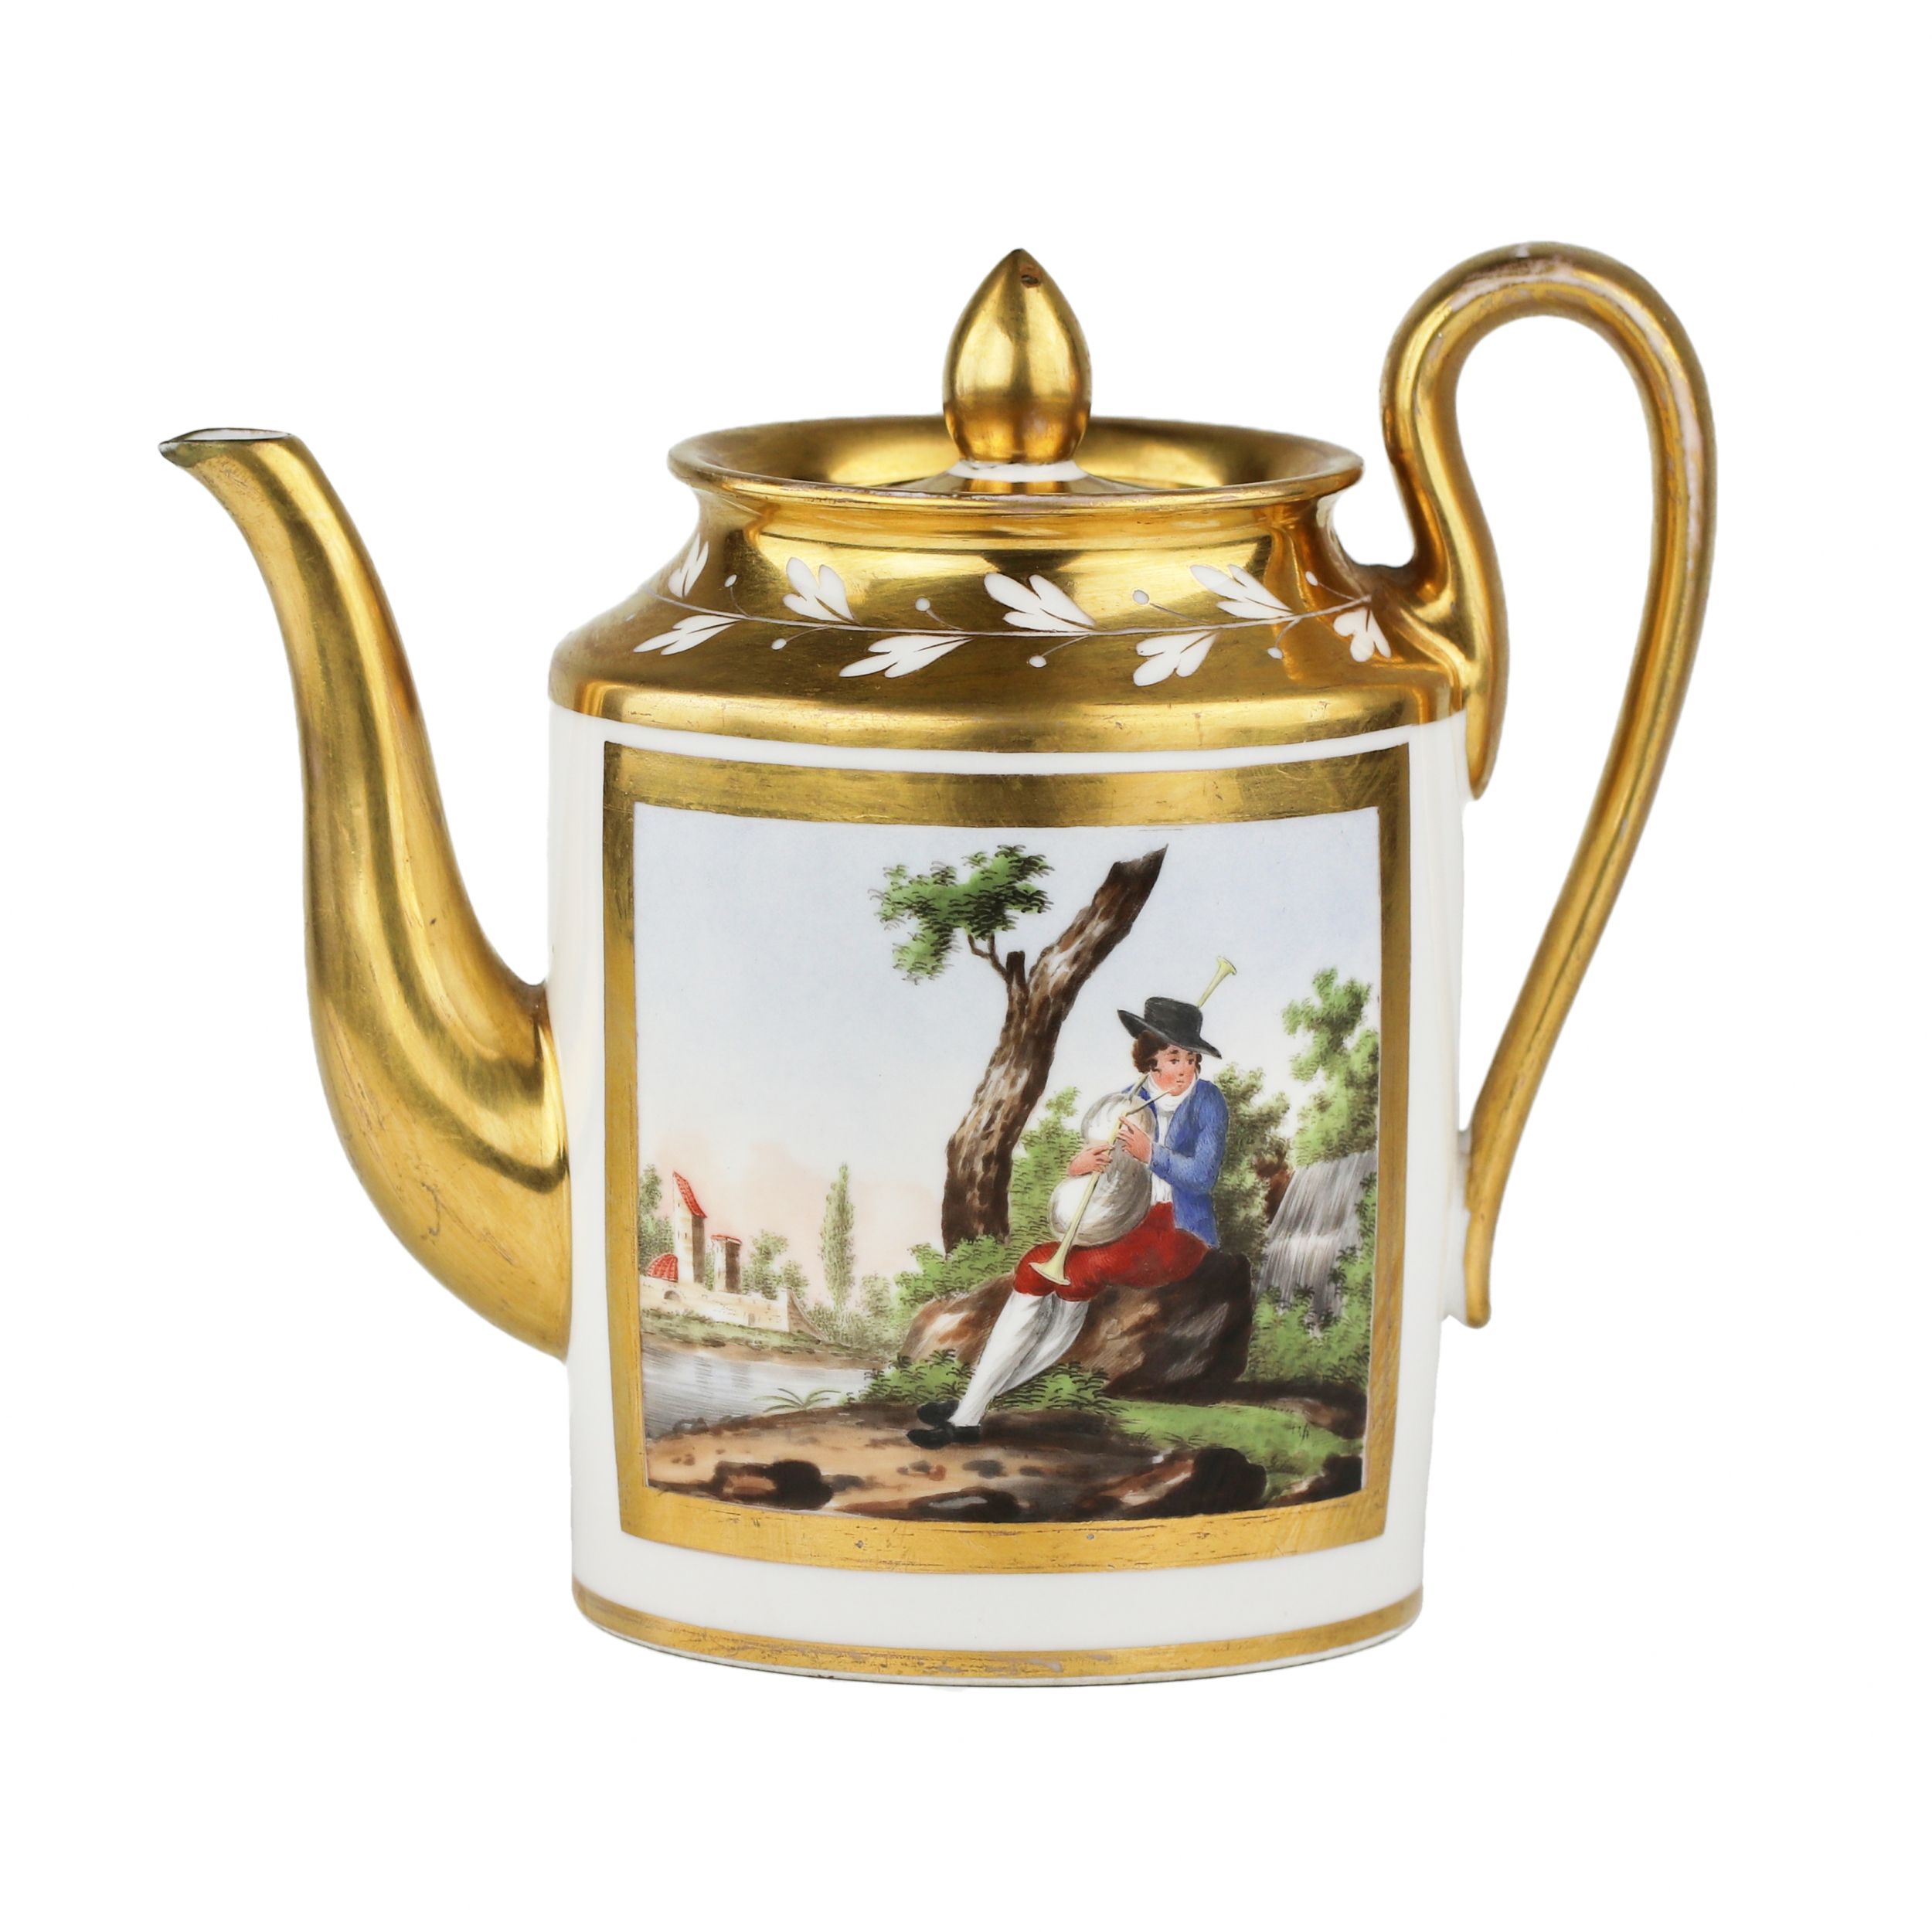 Gardner-porcelain-teapot-Russia-182030s-